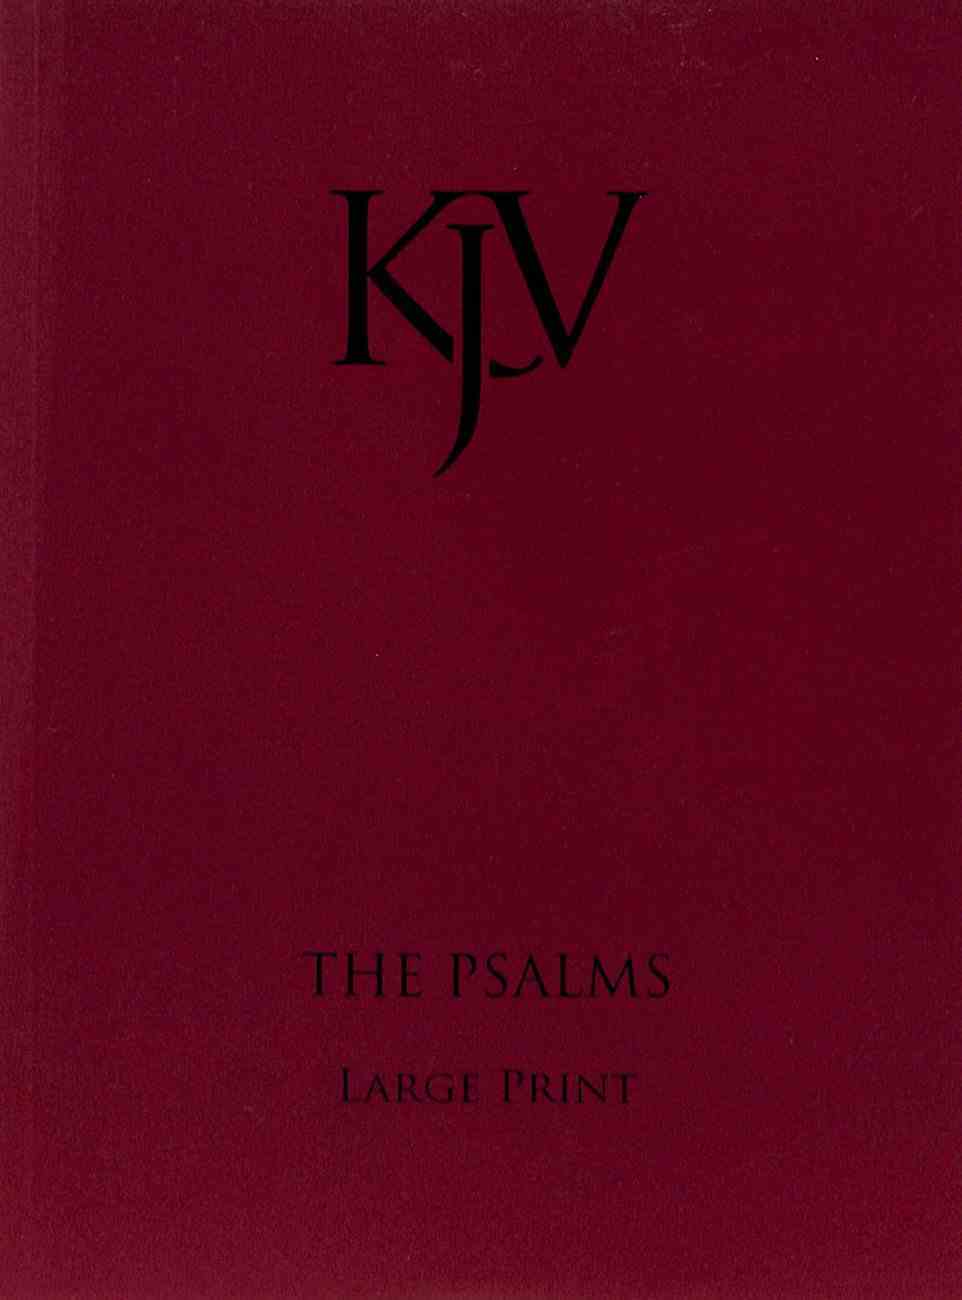 KJV Large Print Psalms Paperback